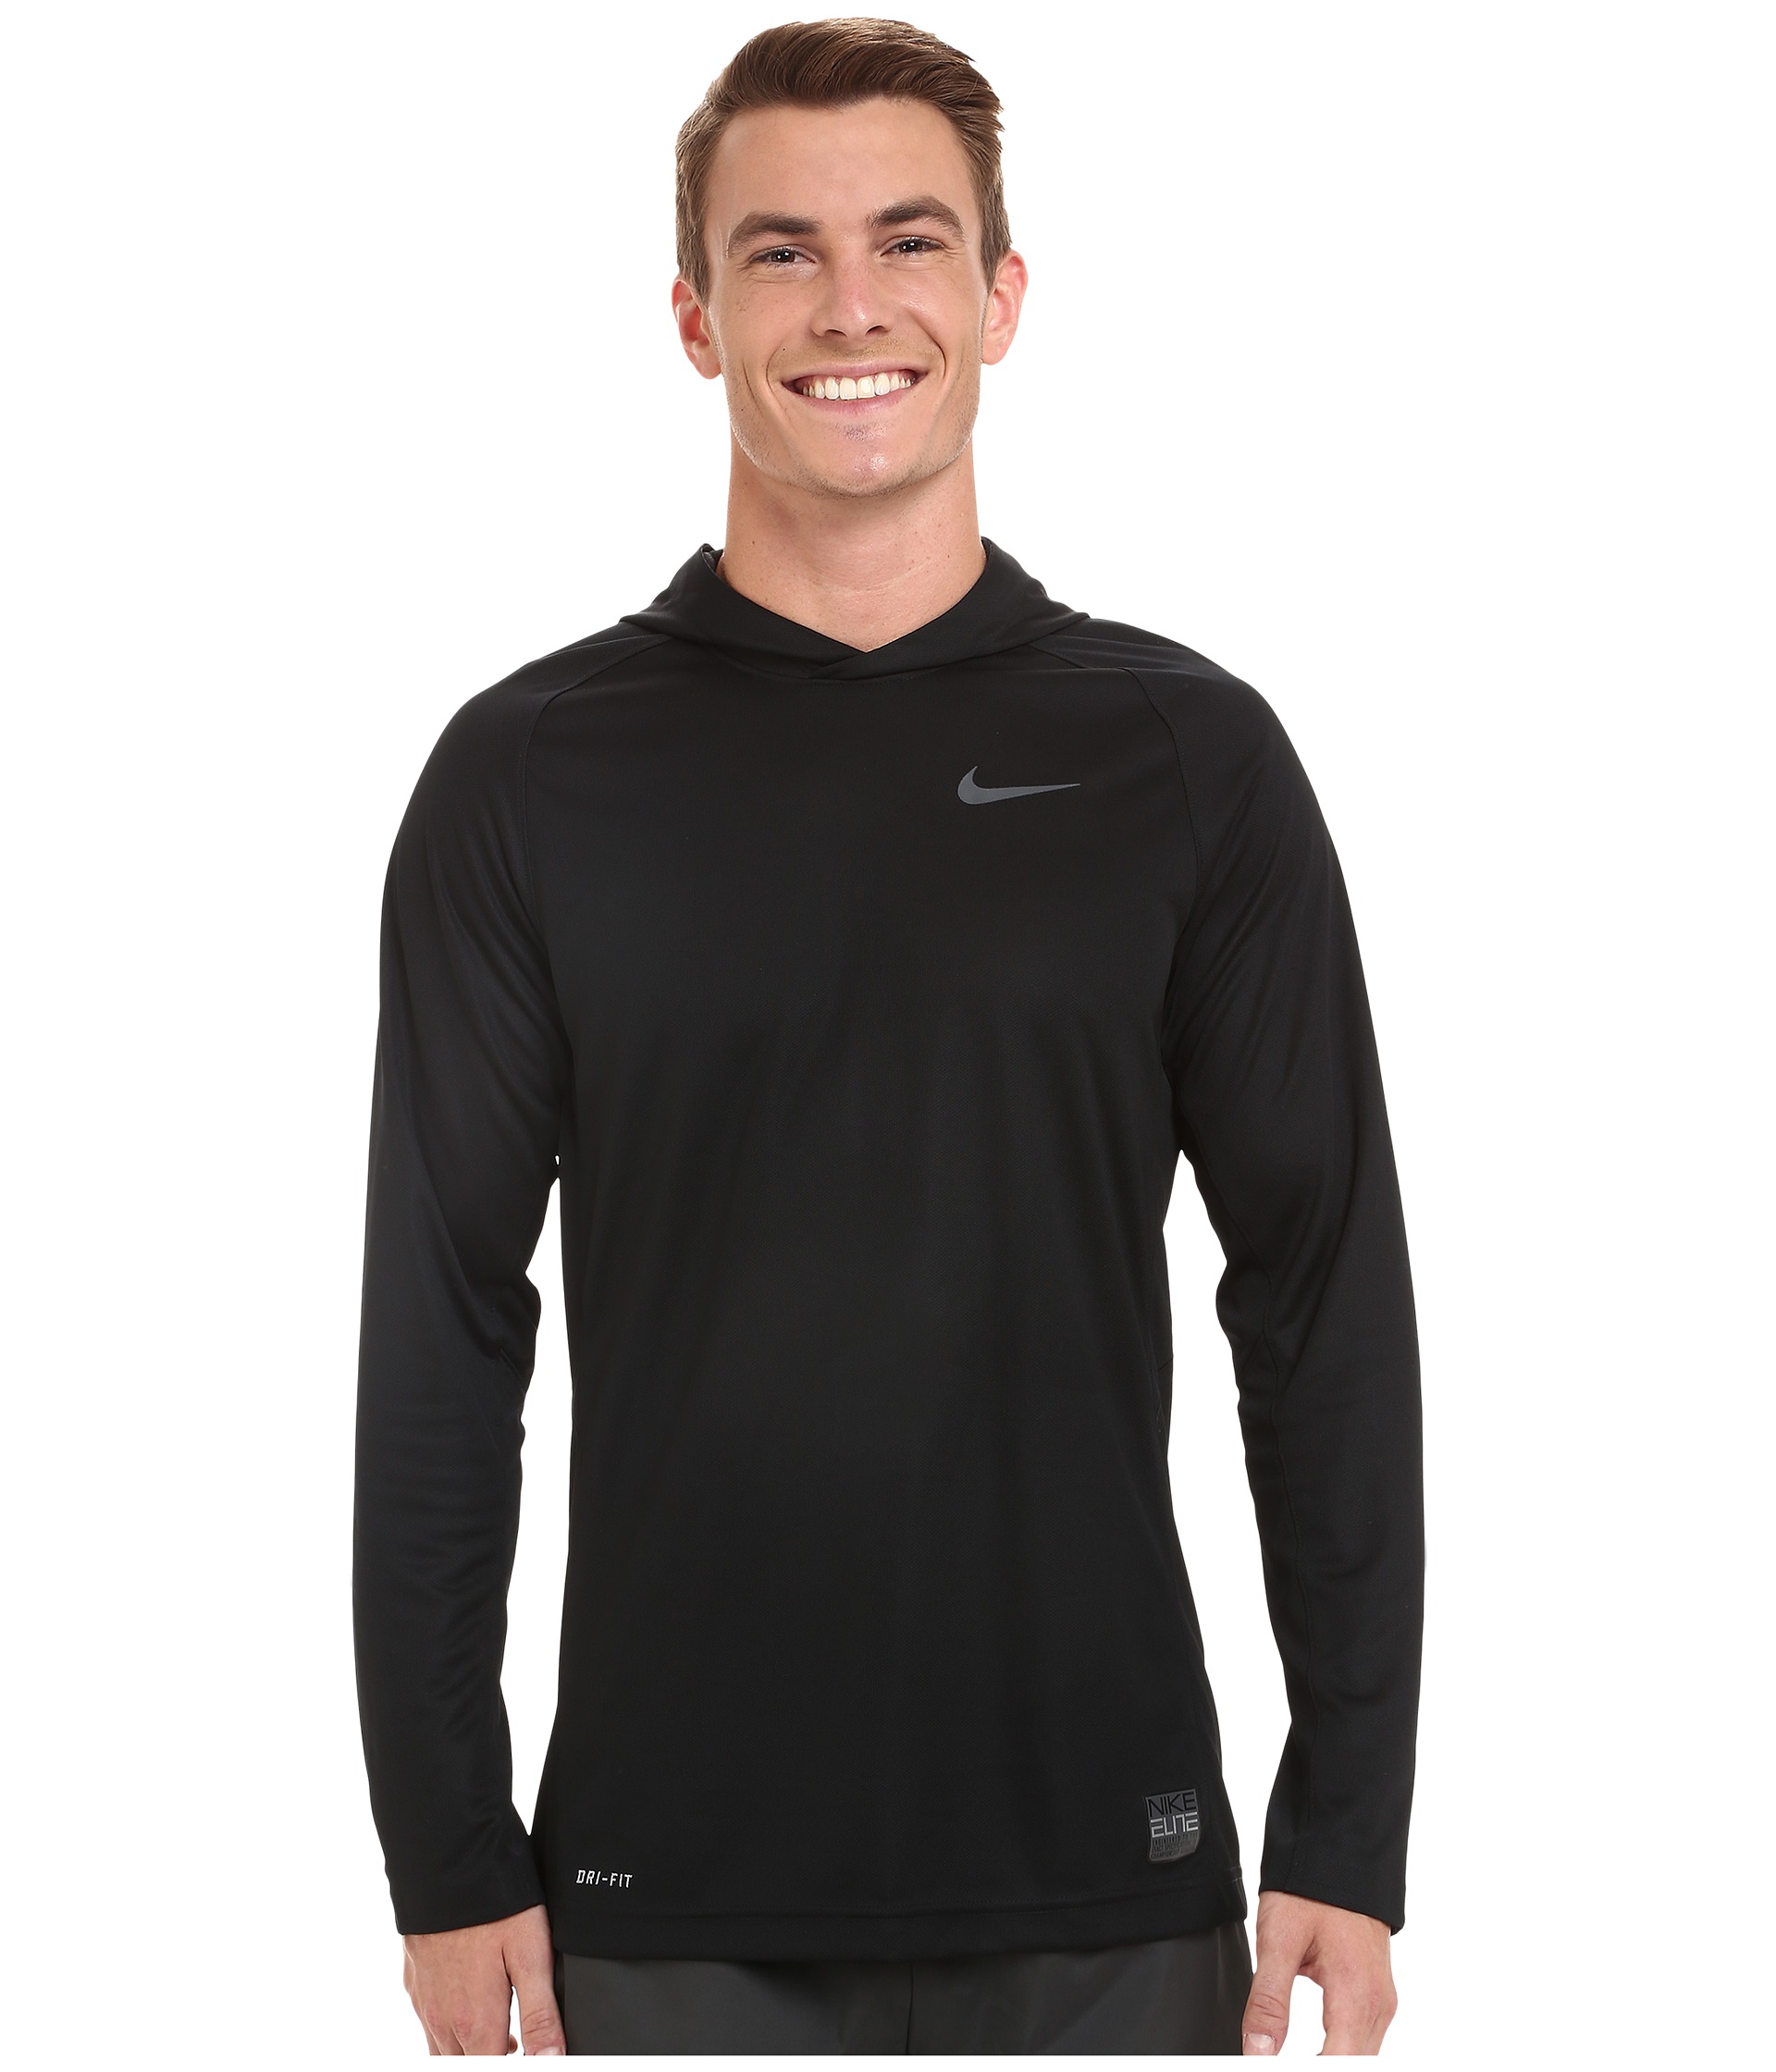 Nike Elite Hooded Shooter Shirt - Zappos.com Free Shipping BOTH Ways